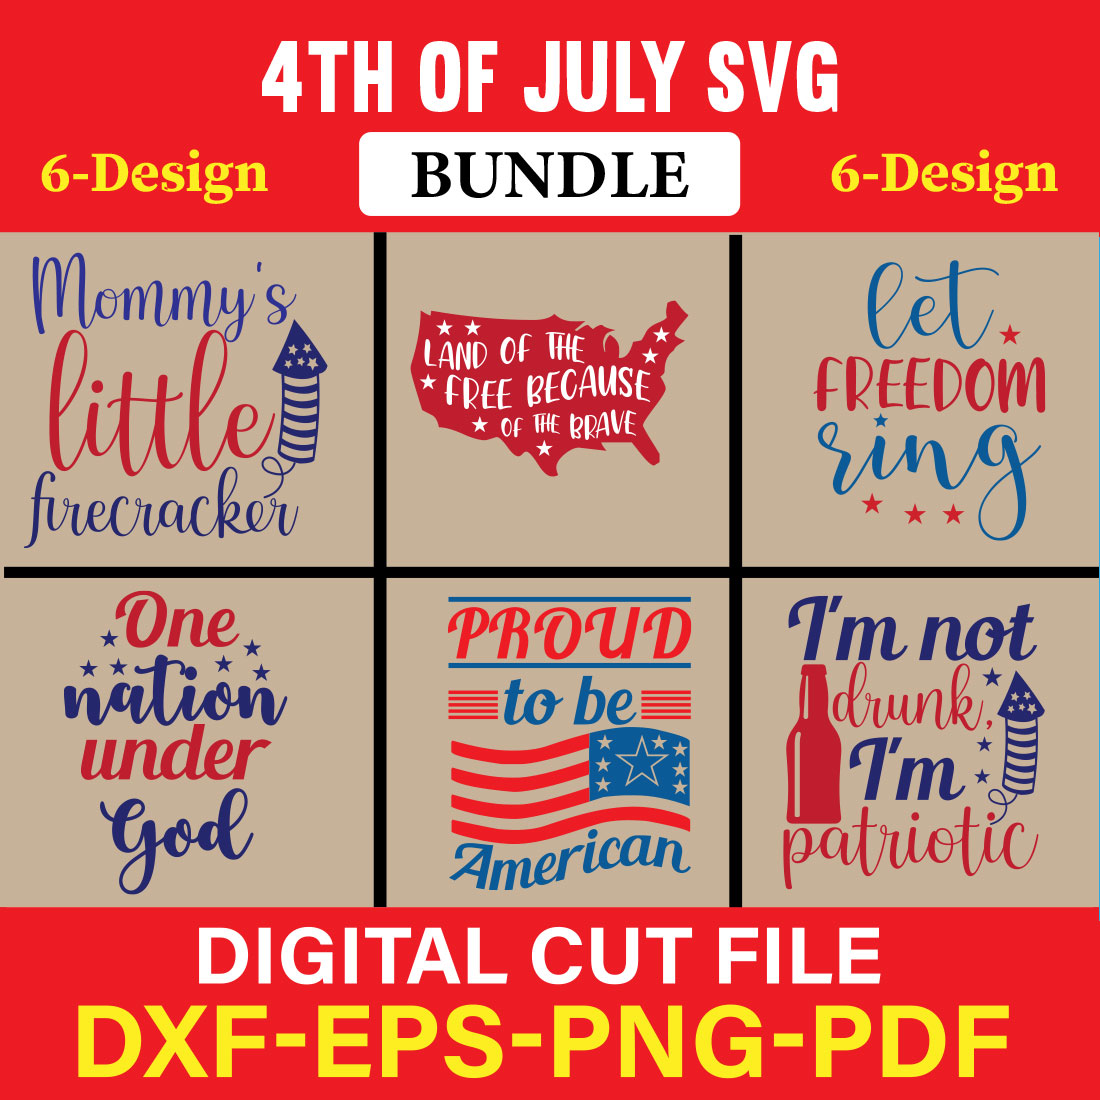 4th of July SVG Bundle, July 4th SVG, Fourth of July SVG Vol-06 cover image.